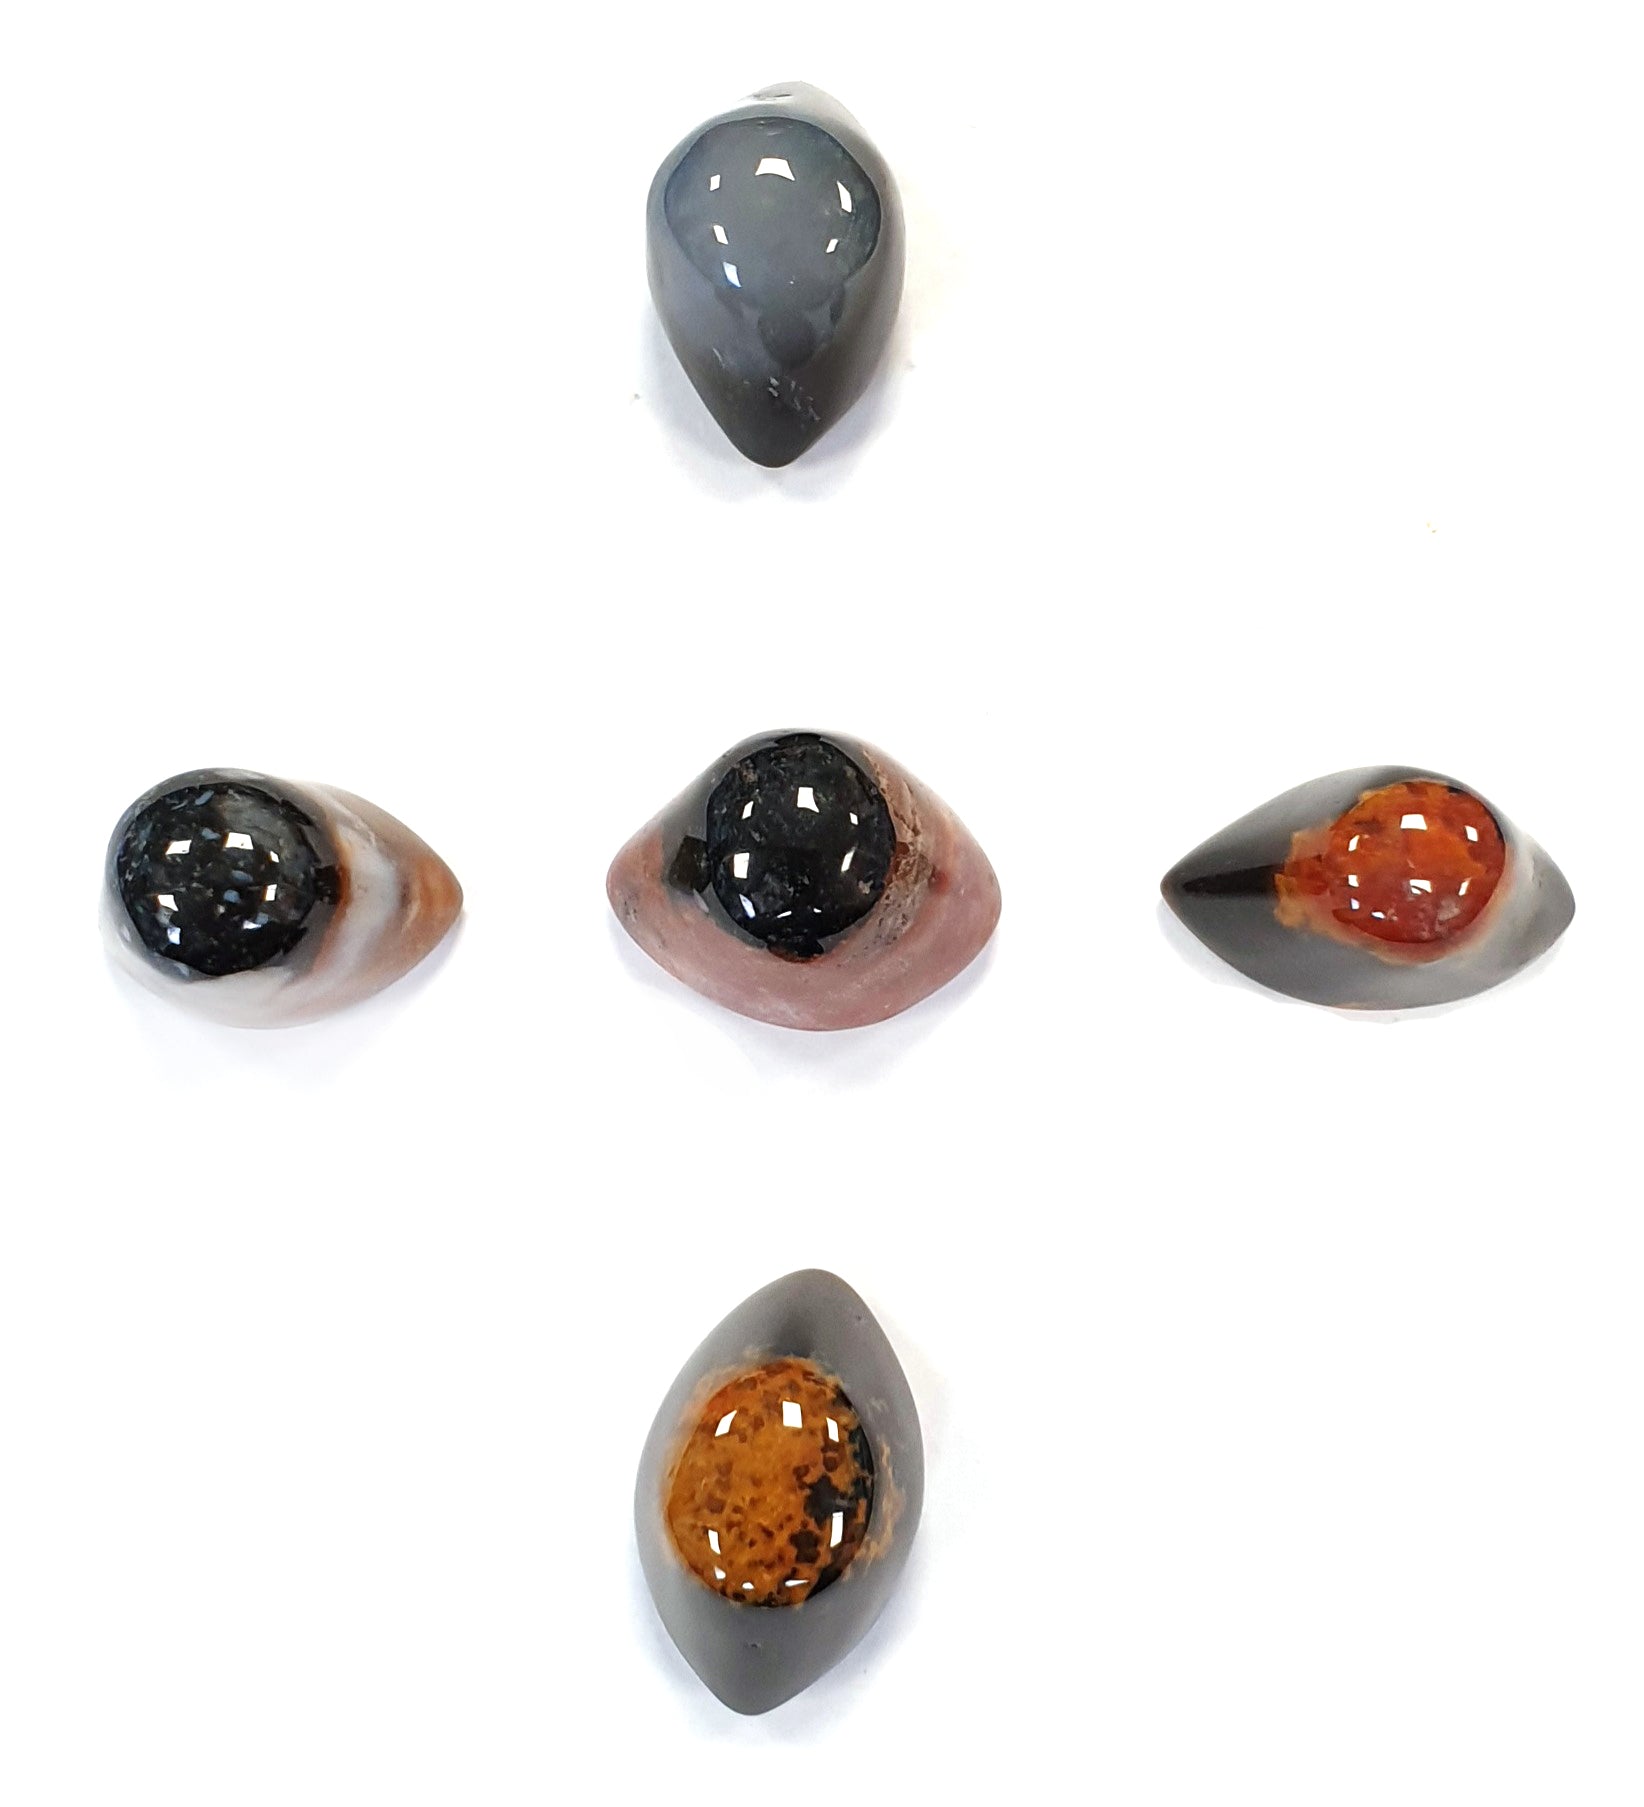 Eye Shape, Eyee ball colour vary, cream, black, orange, brown